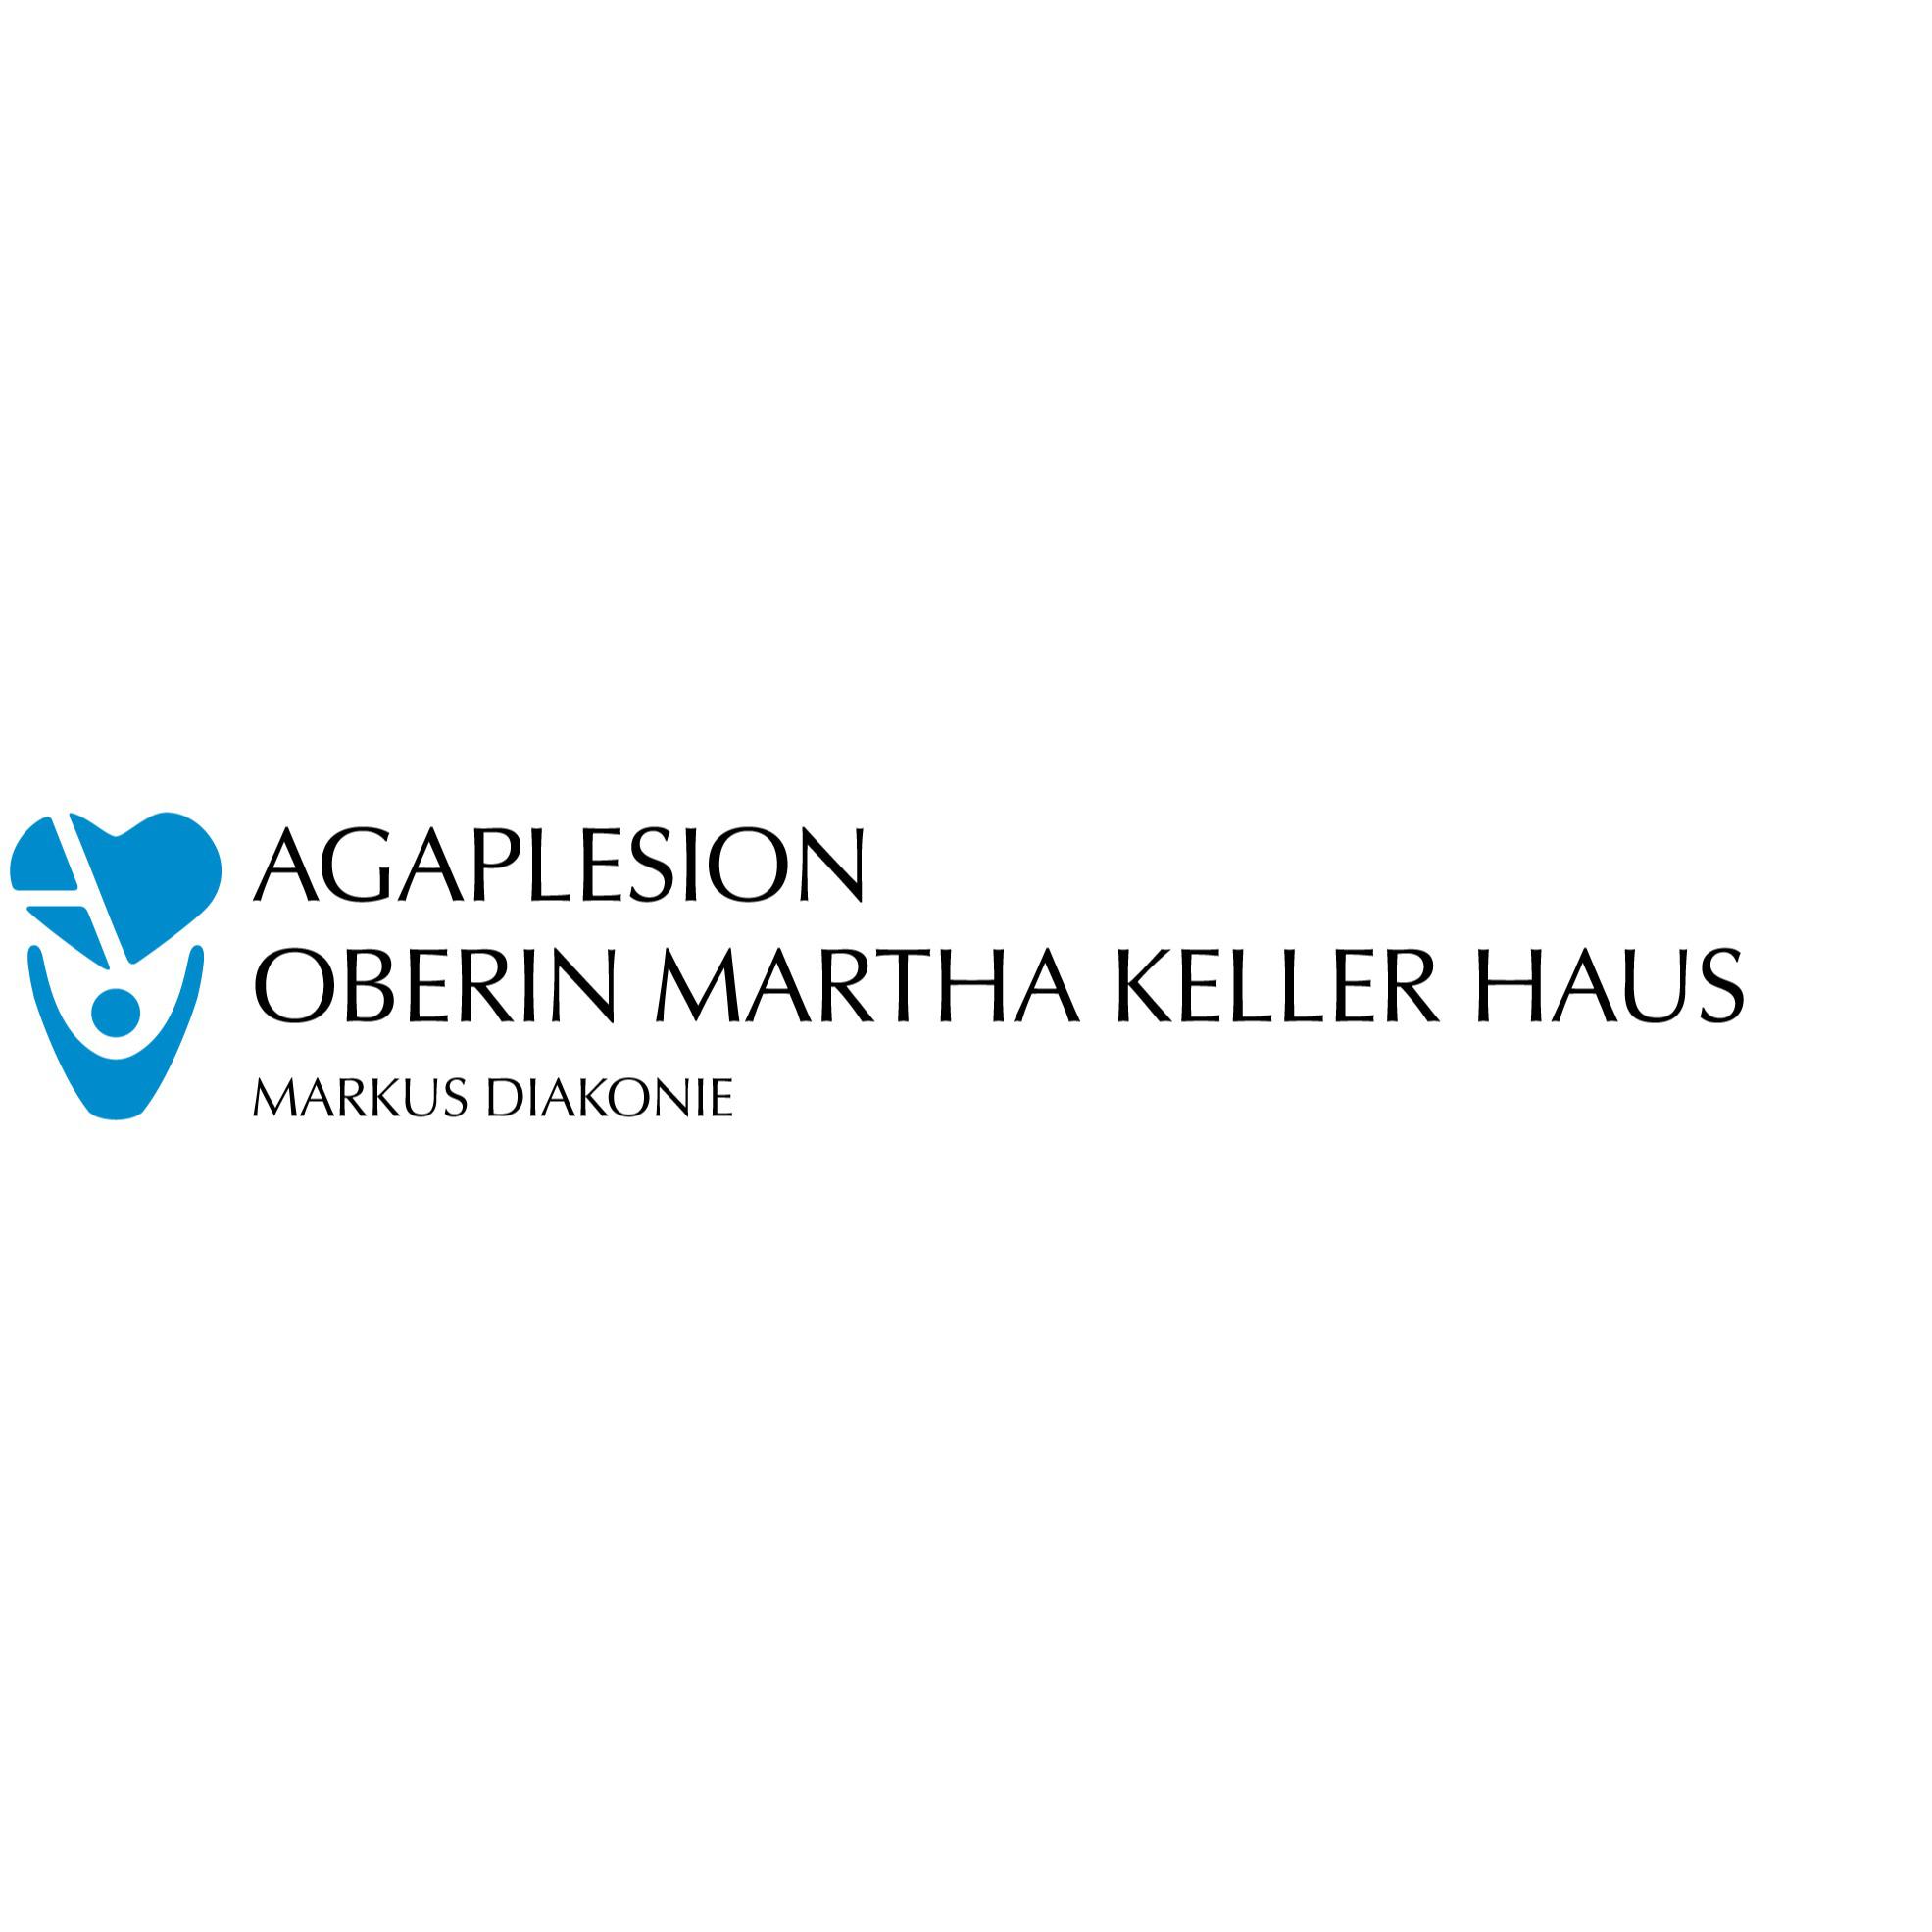 AGAPLESION OBERIN MARTHA KELLER HAUS in Frankfurt am Main - Logo